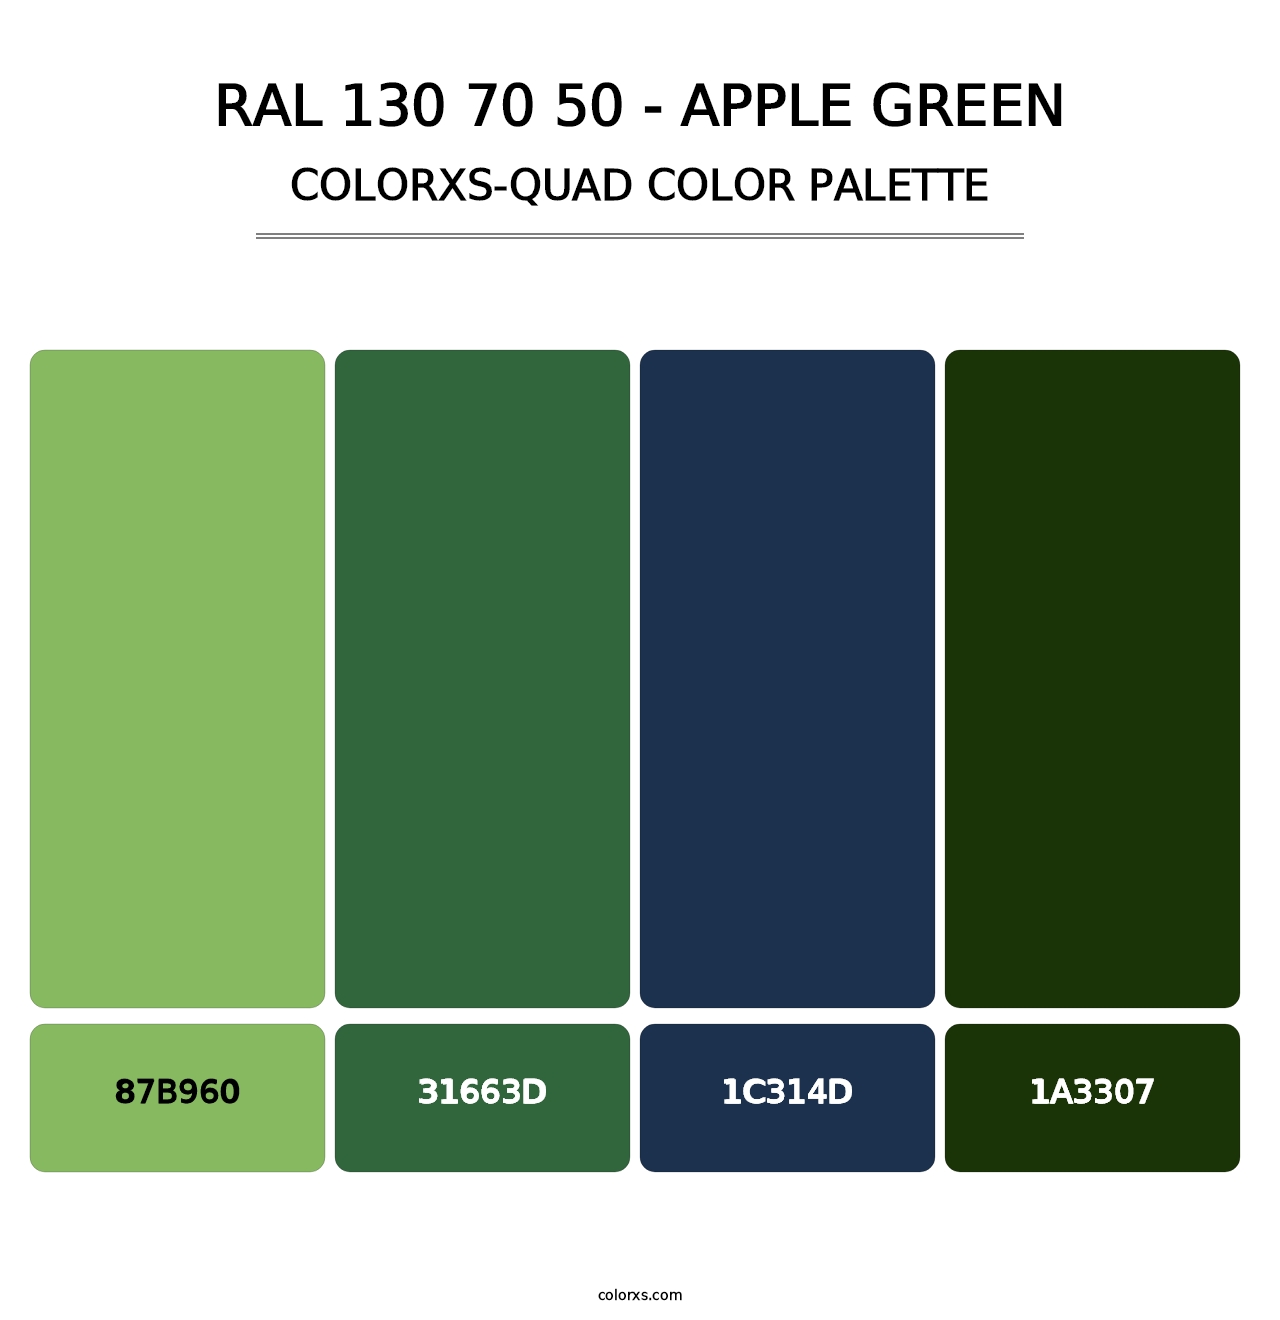 RAL 130 70 50 - Apple Green - Colorxs Quad Palette